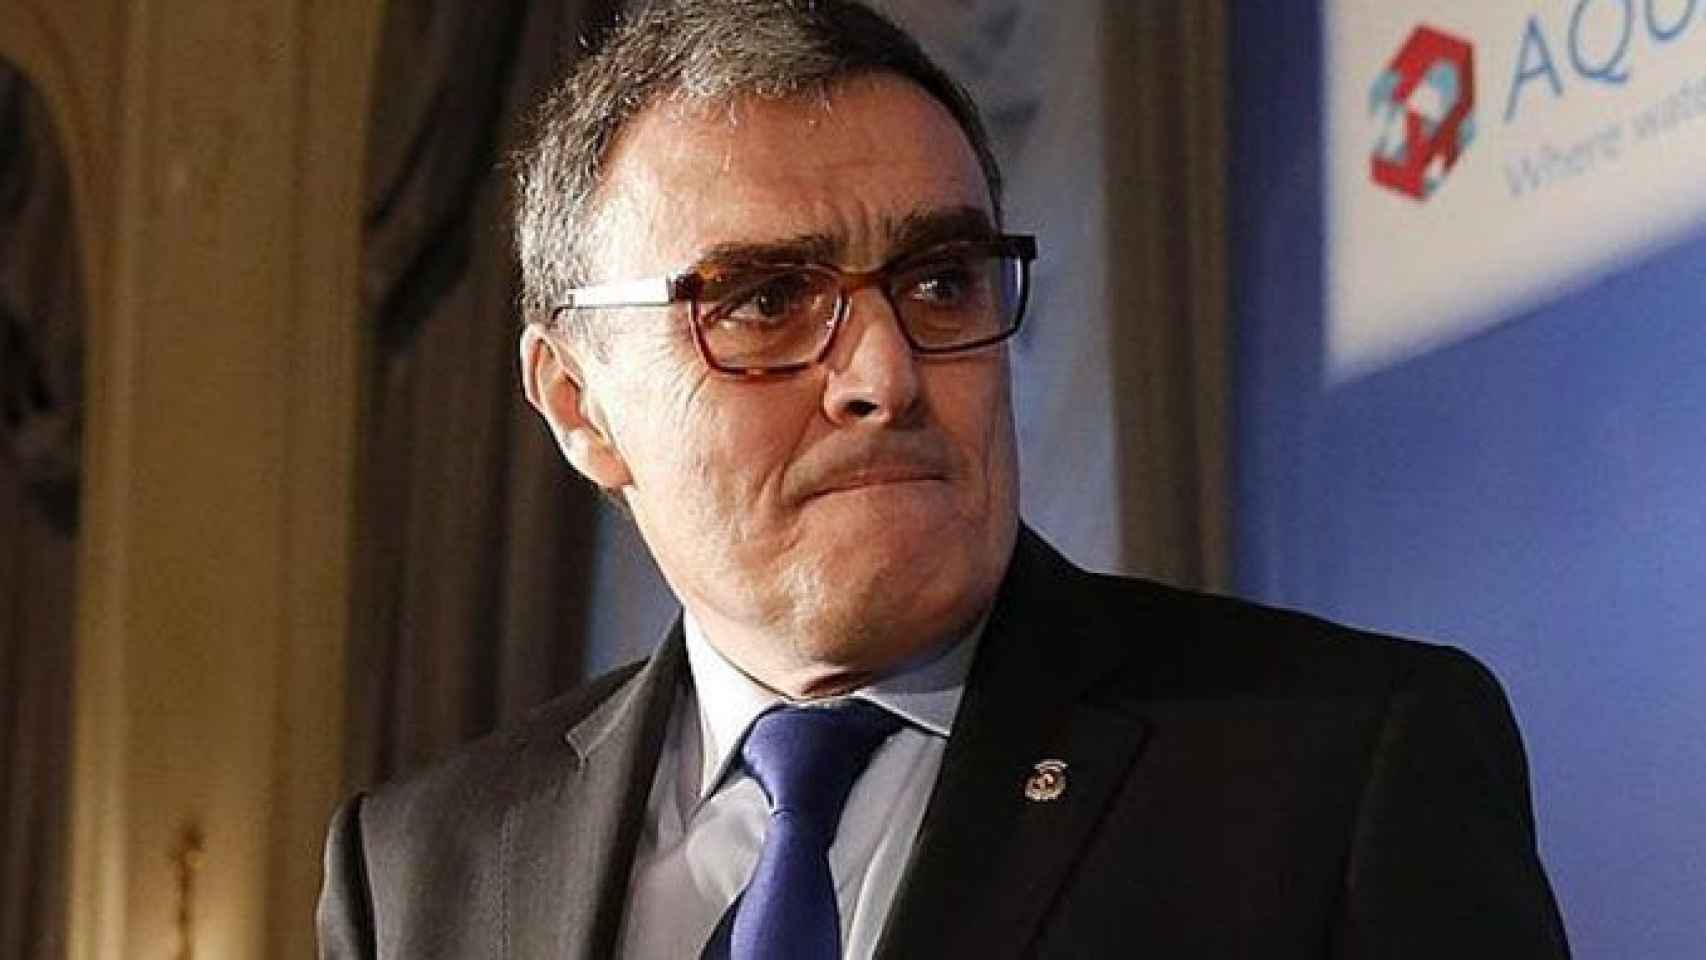 El alcalde de Lleida, Àngel Ros, miembro del PSC / CG